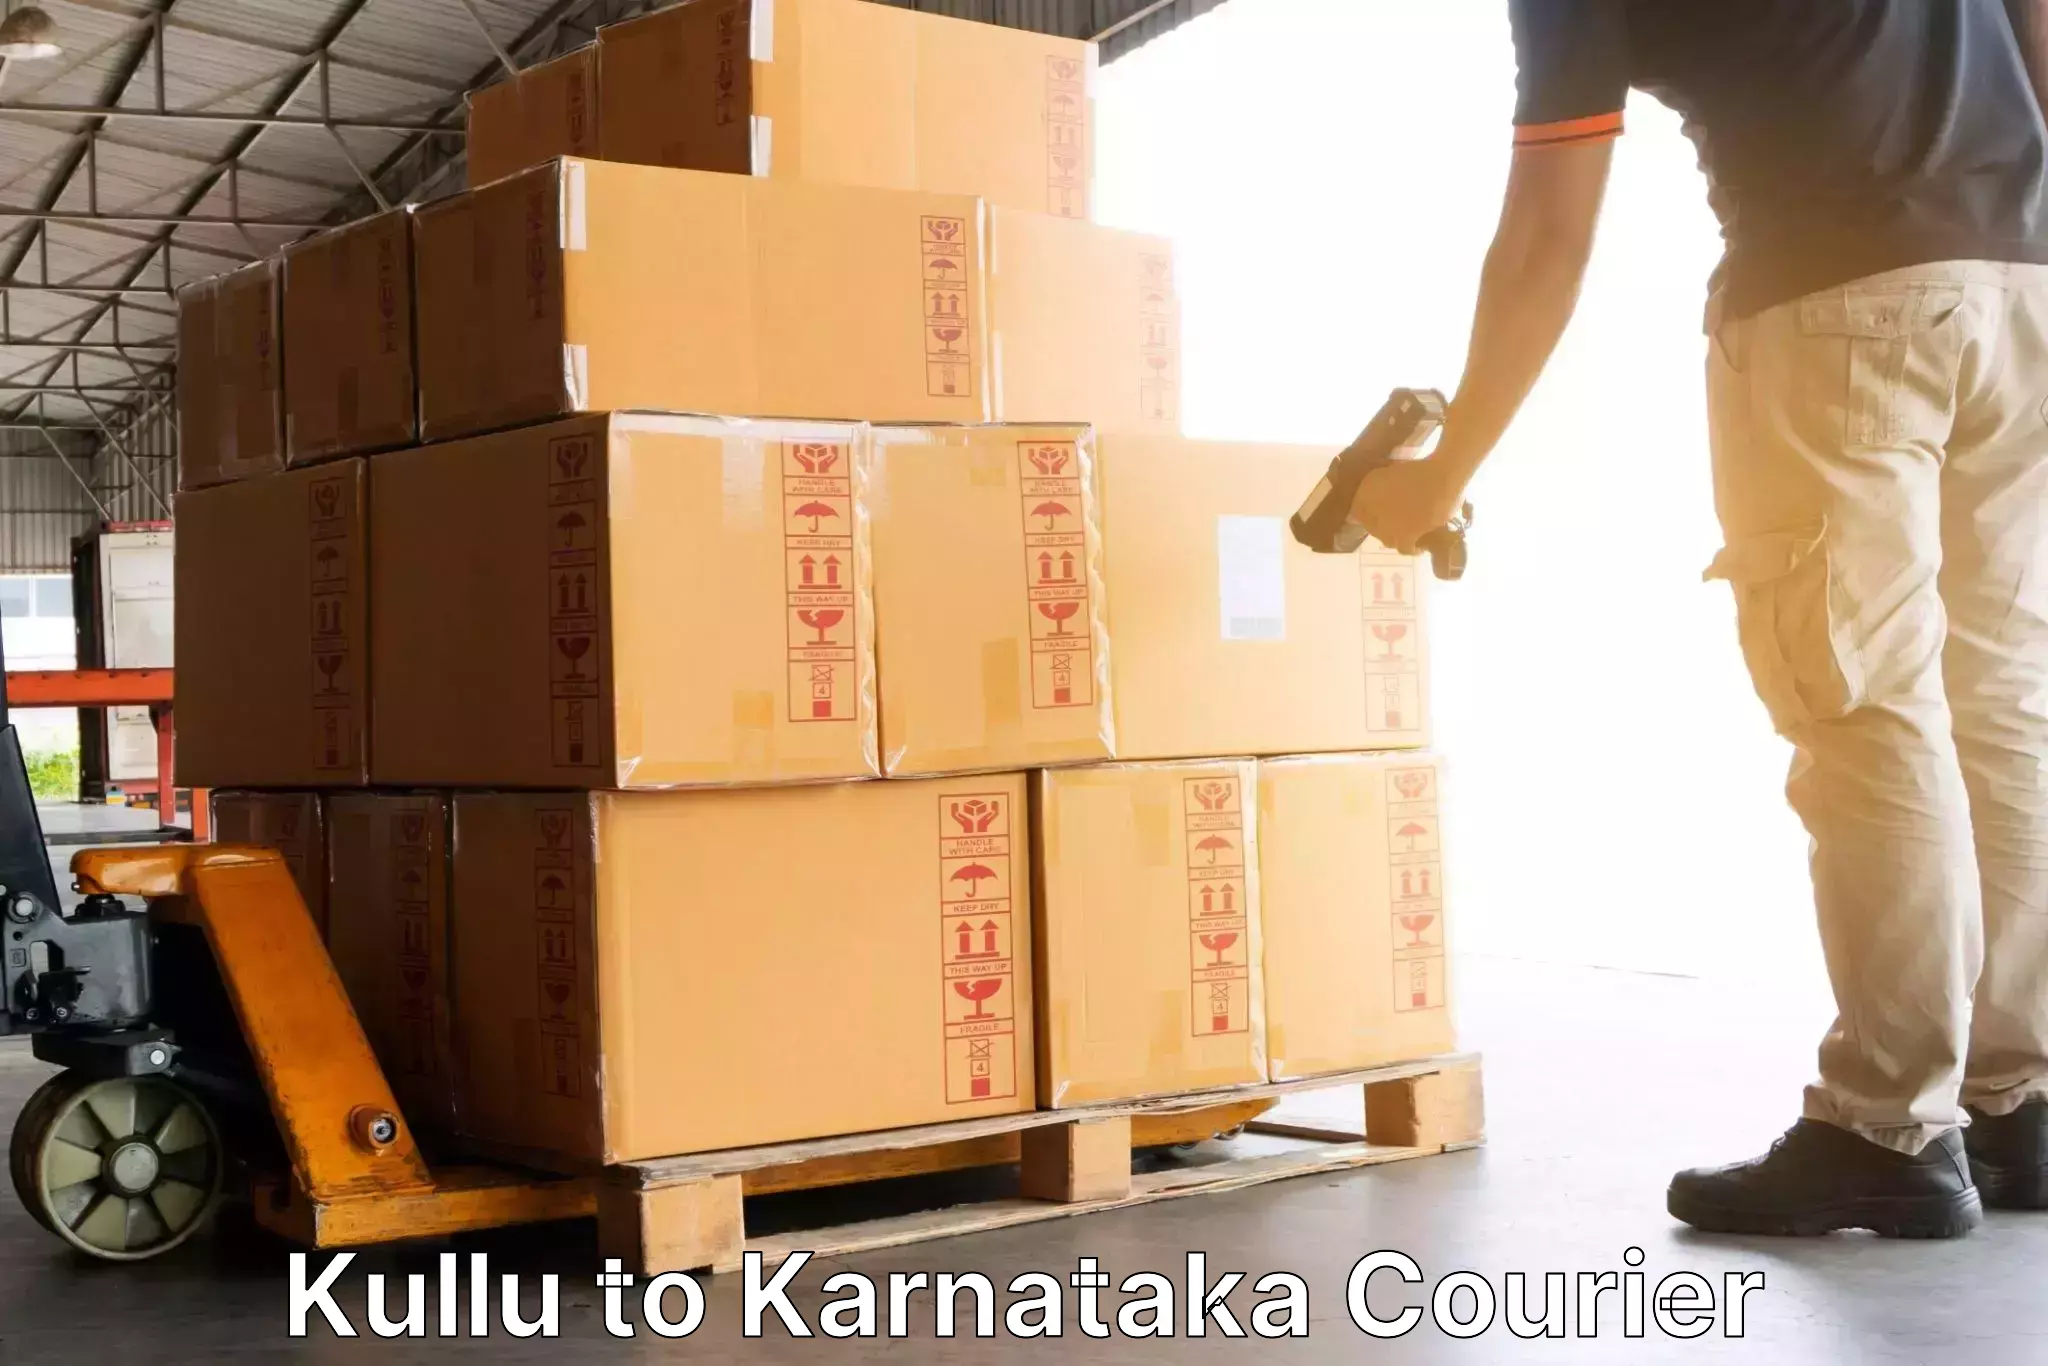 Package delivery network Kullu to Uchila